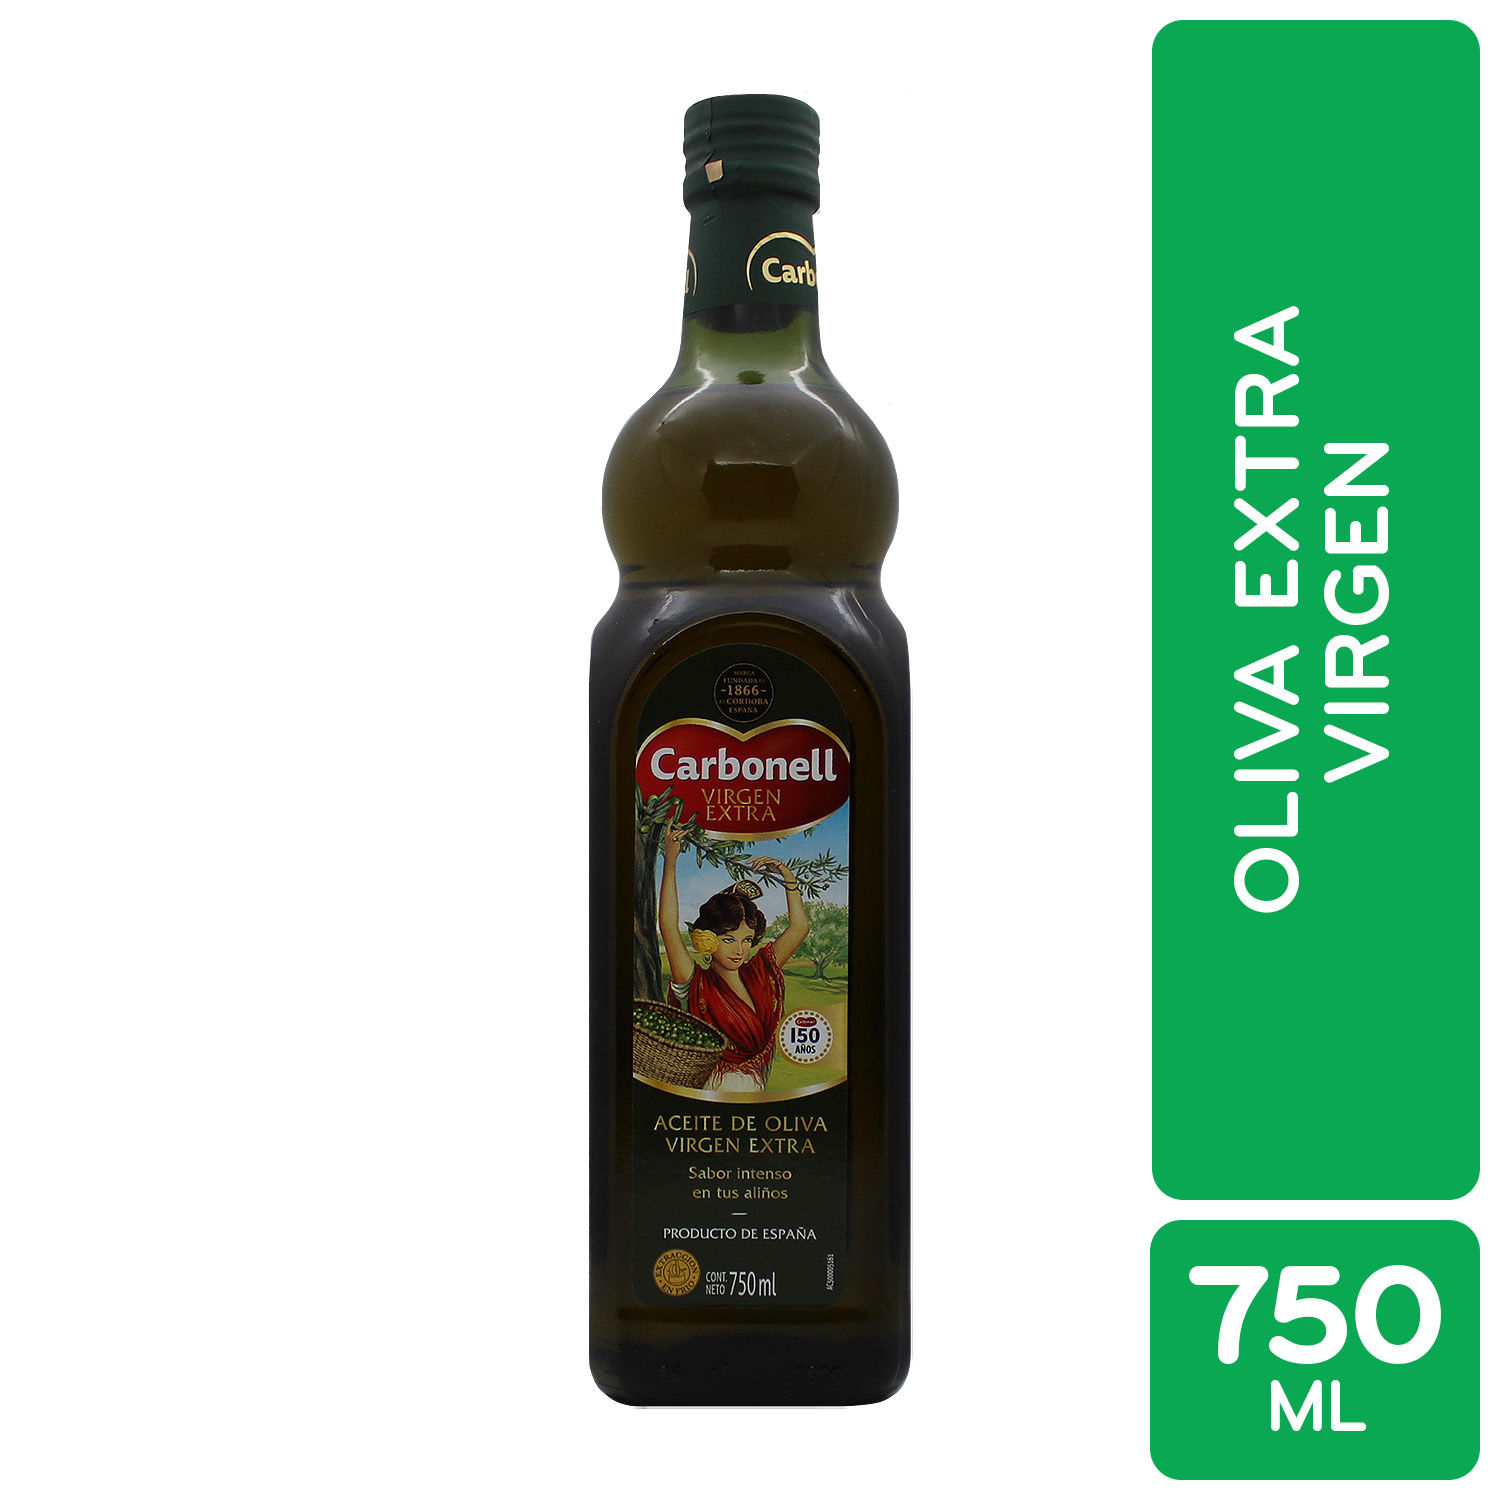 Aceite de Oliva Carbonell Extra Virgen 750ml